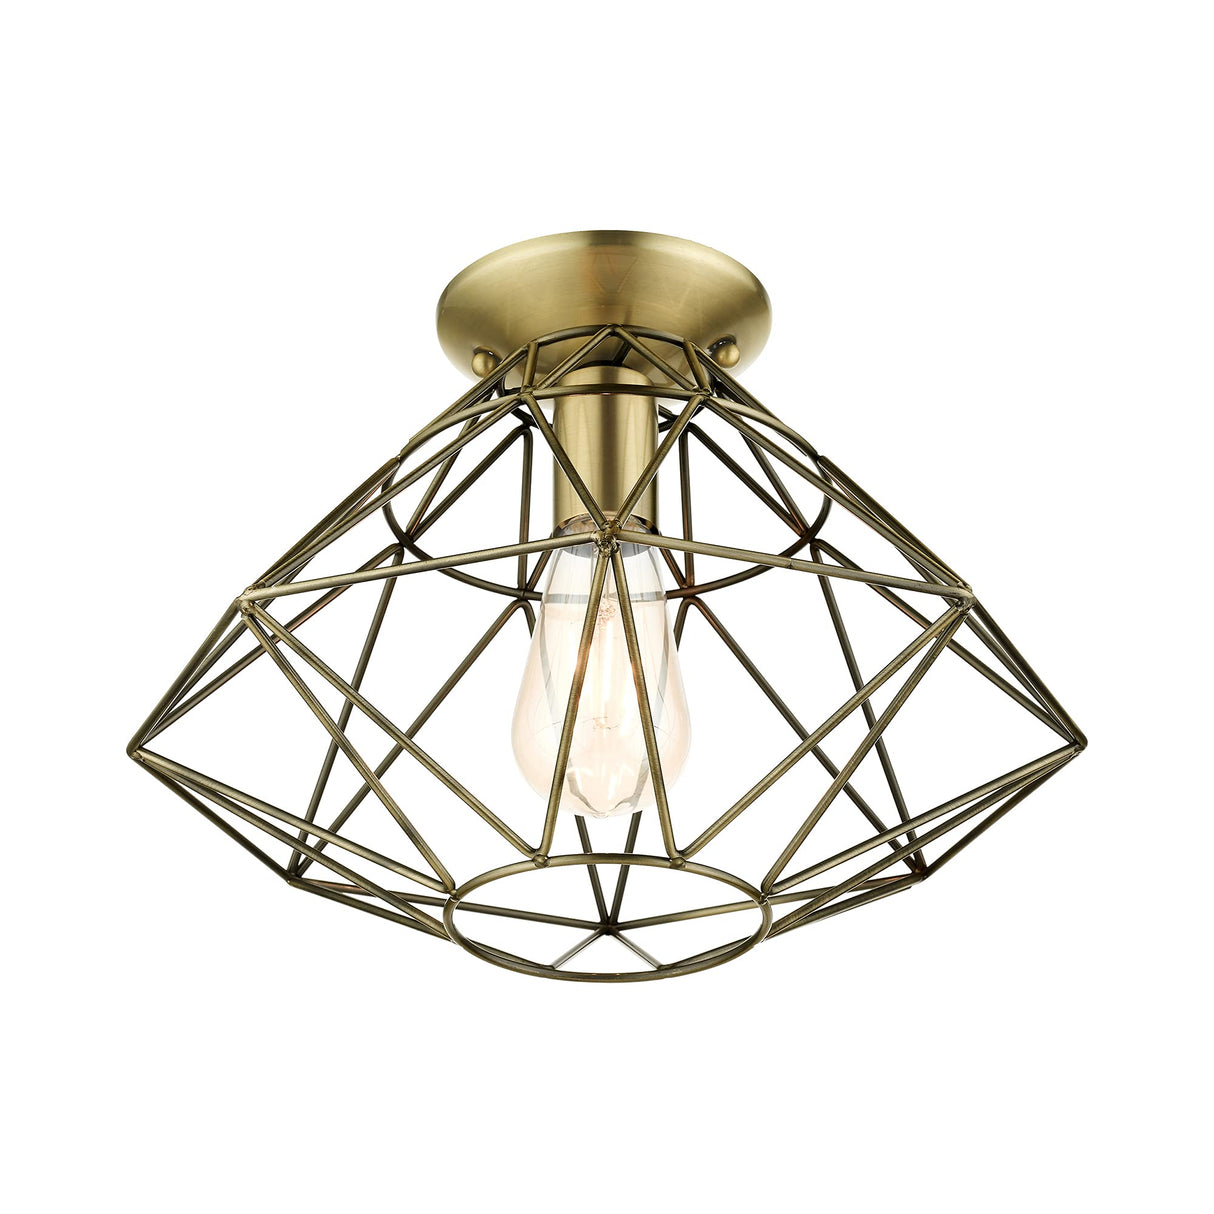 Livex Lighting 46248-01 Geometric Collection 1-Light Flush Mount Ceiling Light, Antique Brass